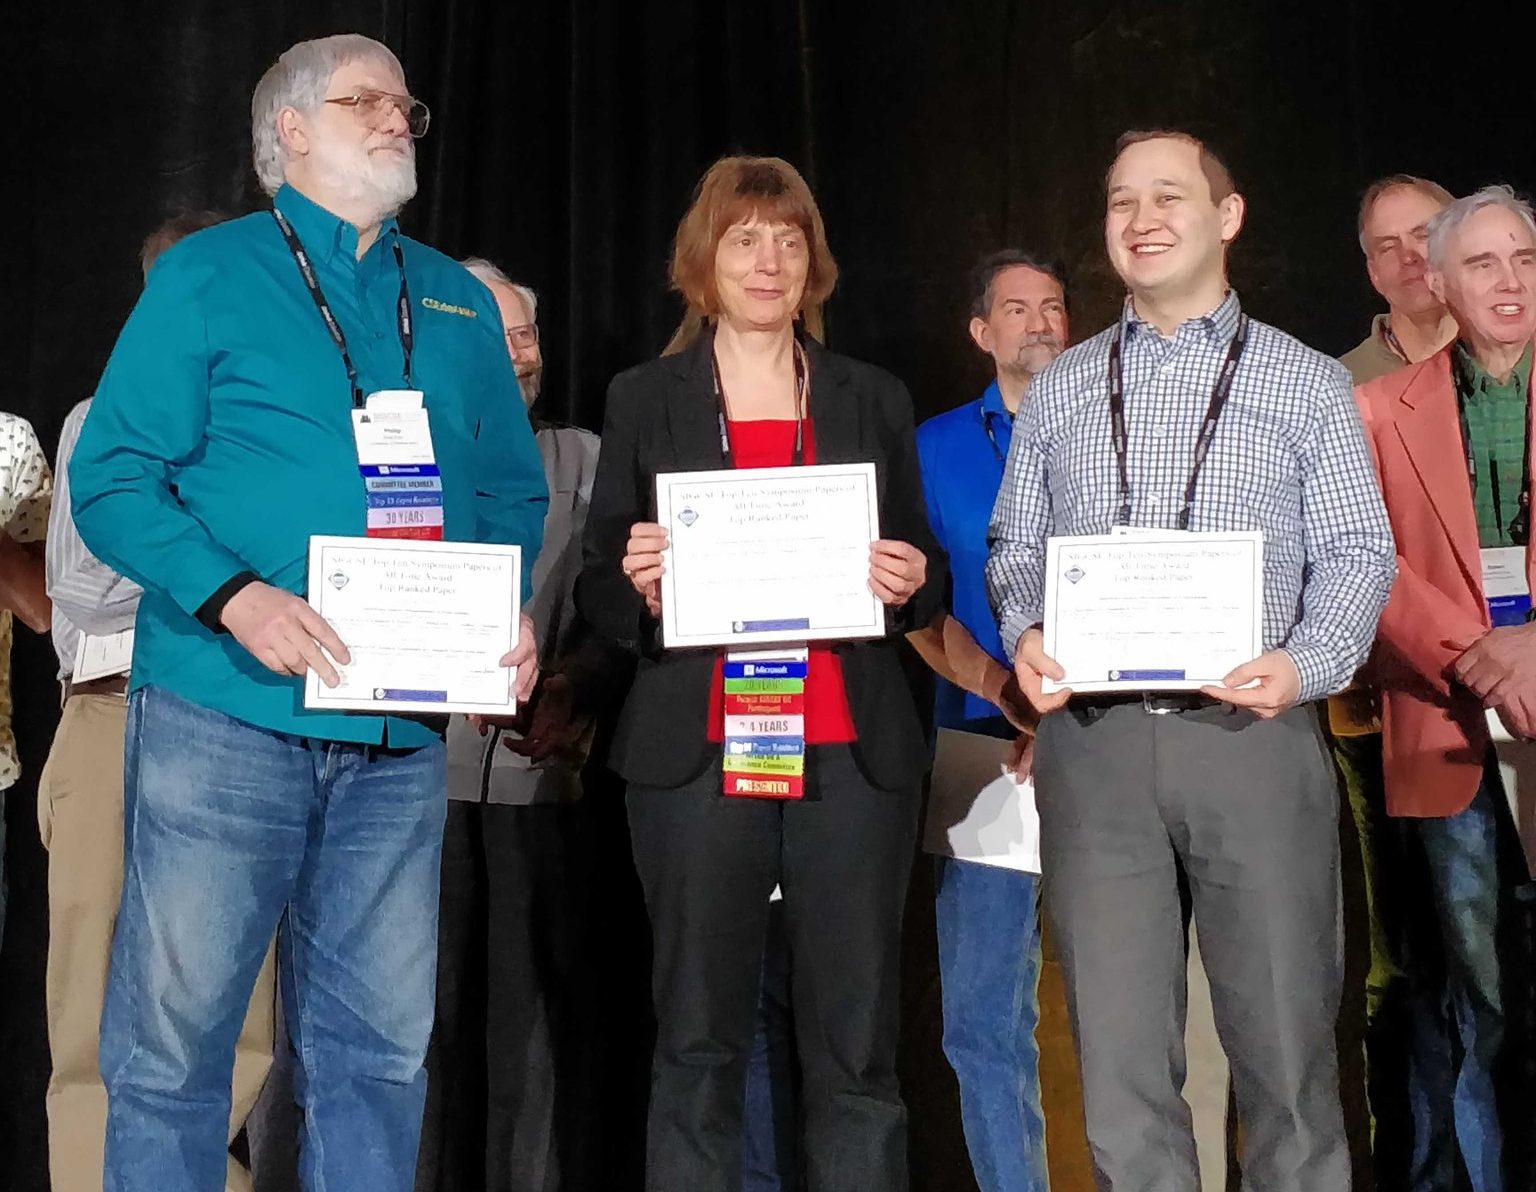 Kaczmarczyk et al (2010) receiving their best paper award at SIGCSE 2019